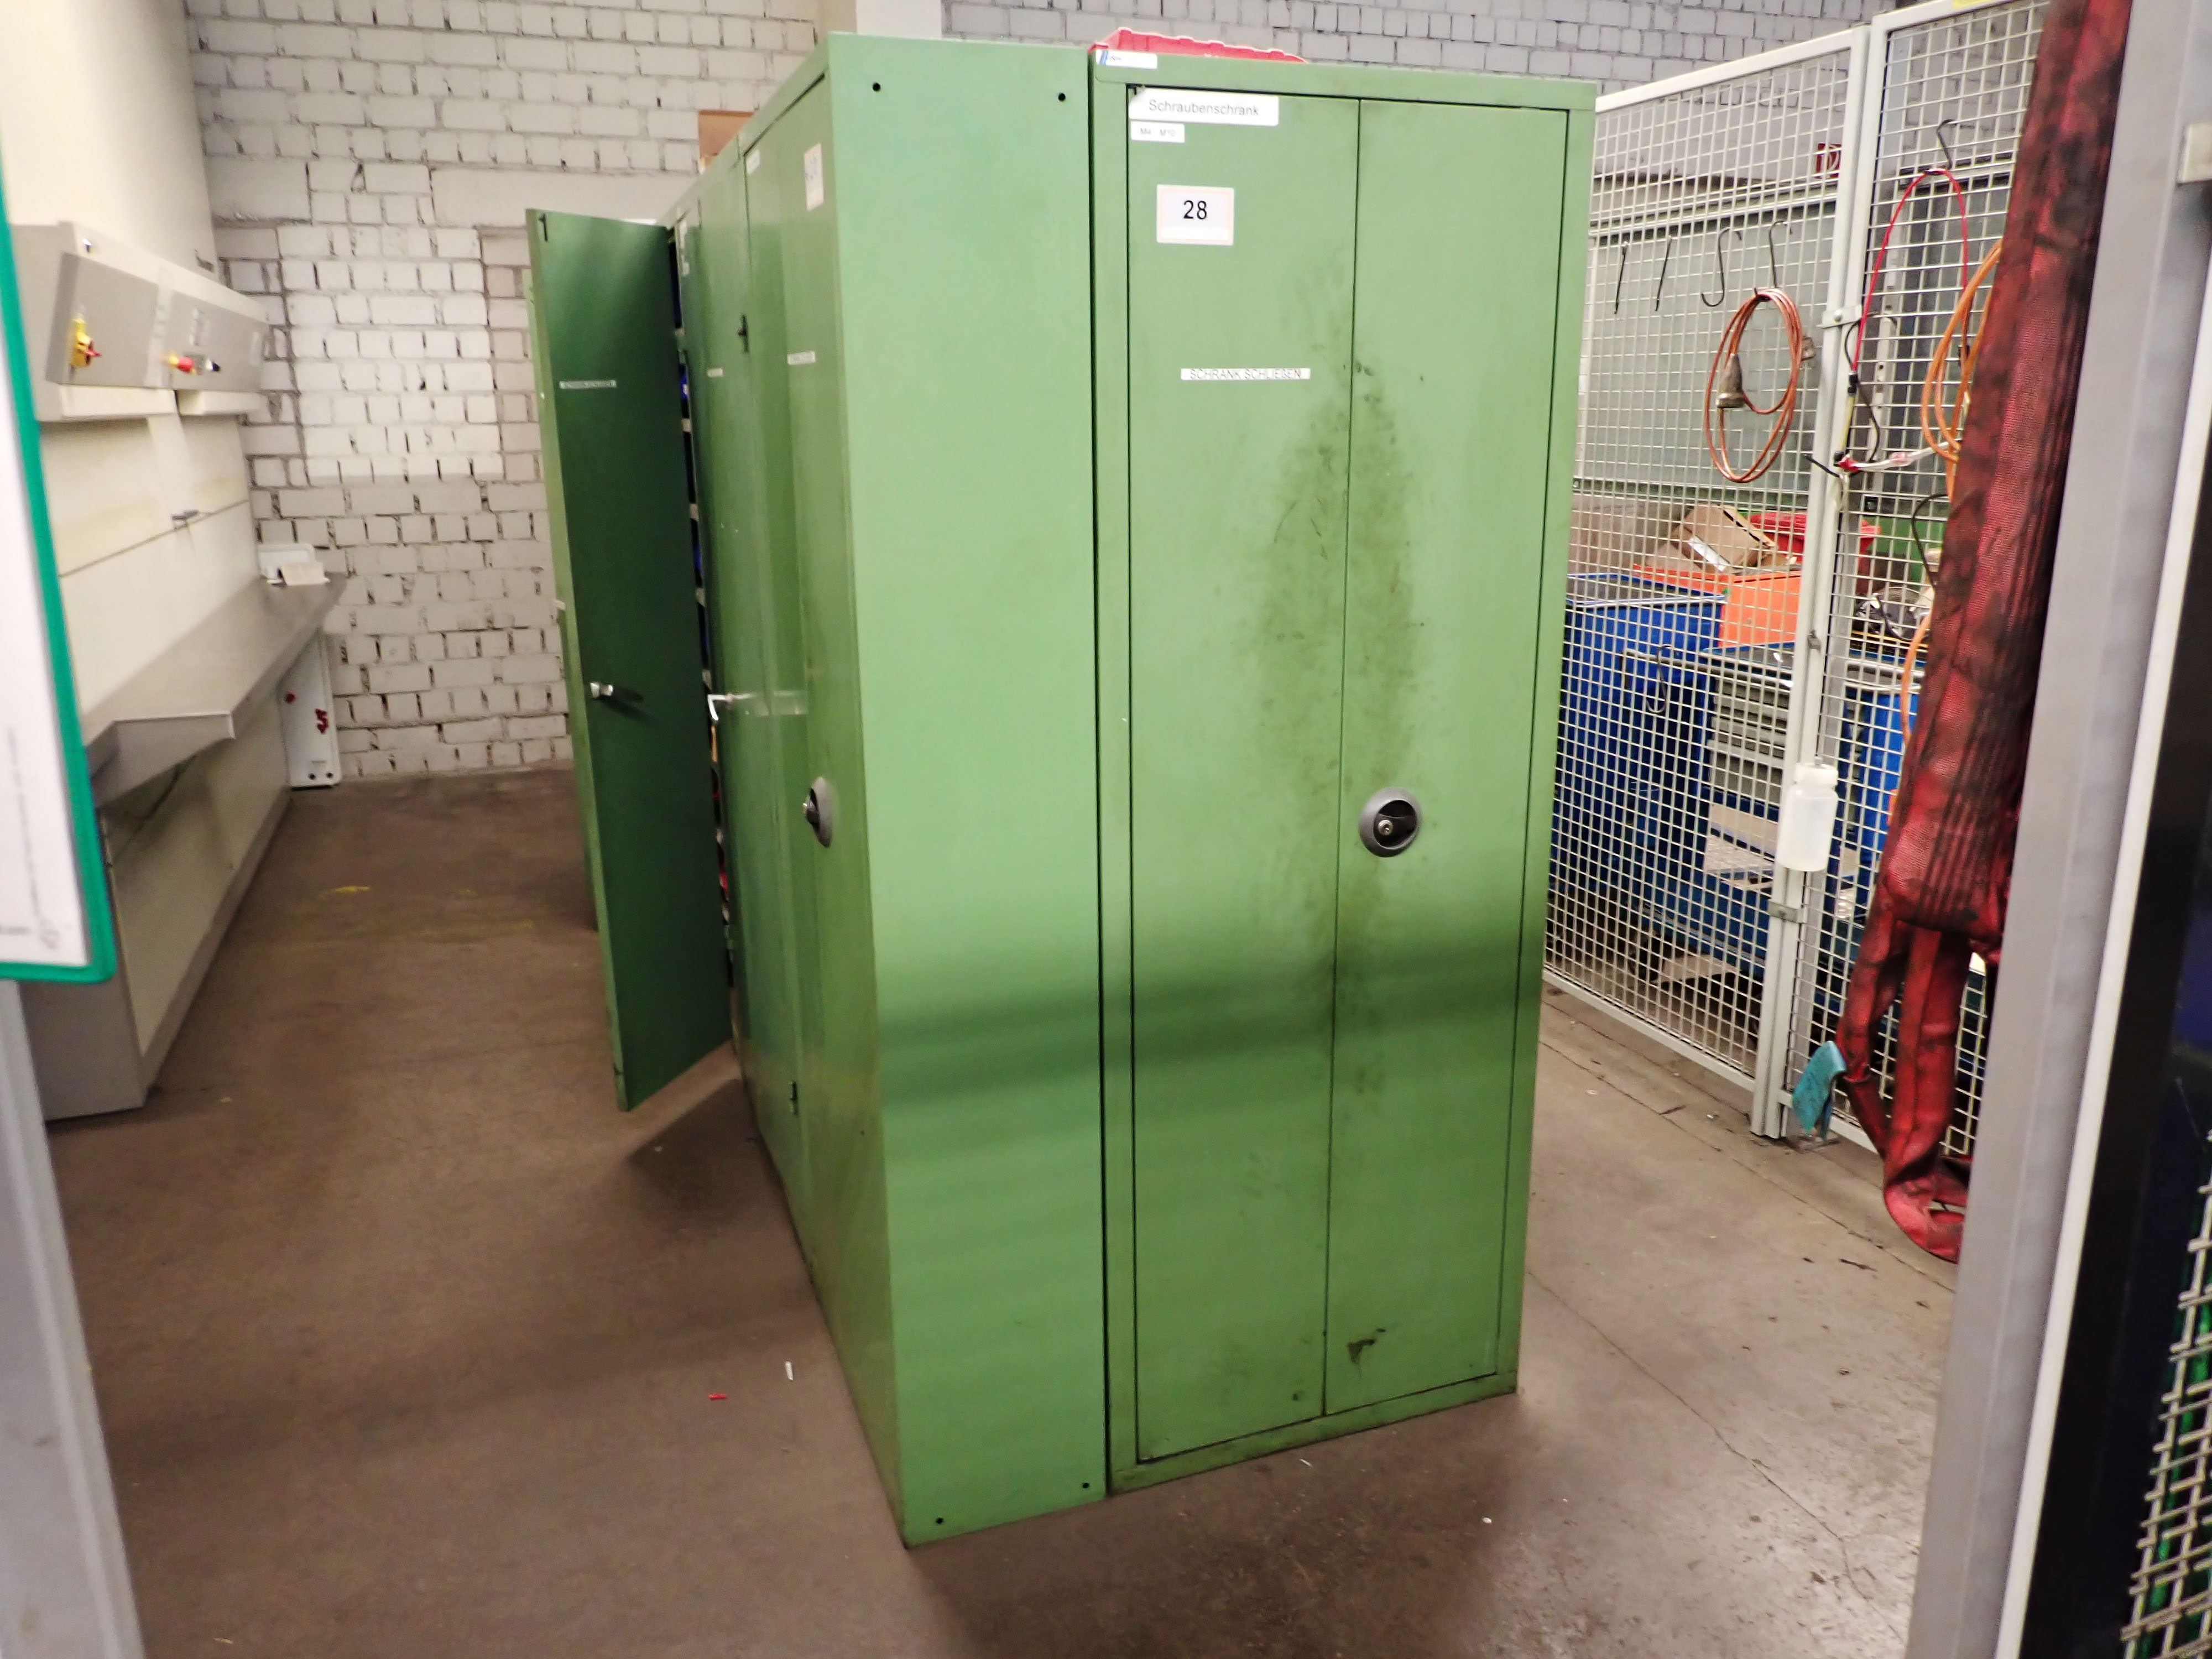 Pos.  28:  Stahlschränke – Lot  28:  Steel cabinets